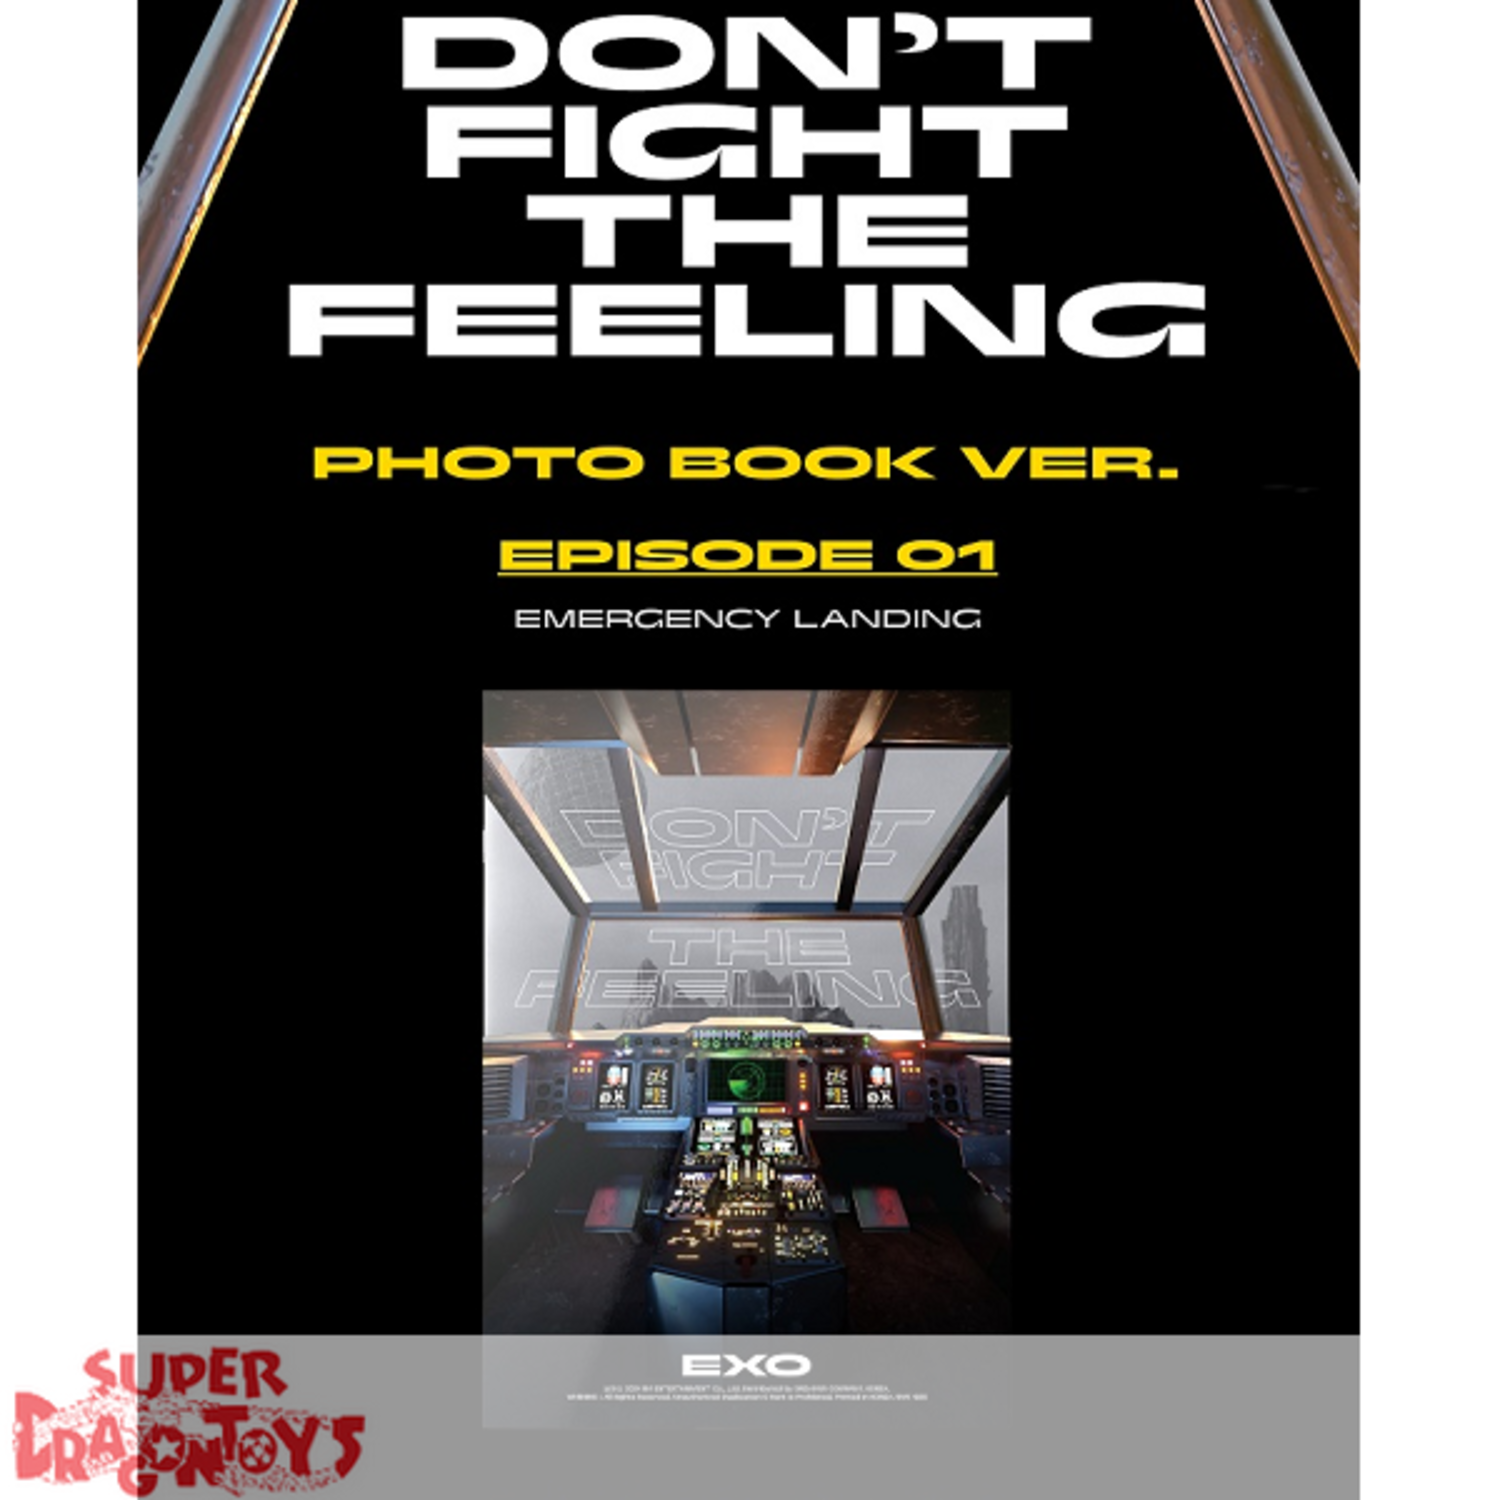 EXO (엑소) - DON'T FIGHT THE FEELING - [PHOTOBOOK VER.1] - SPECIAL ALBUM